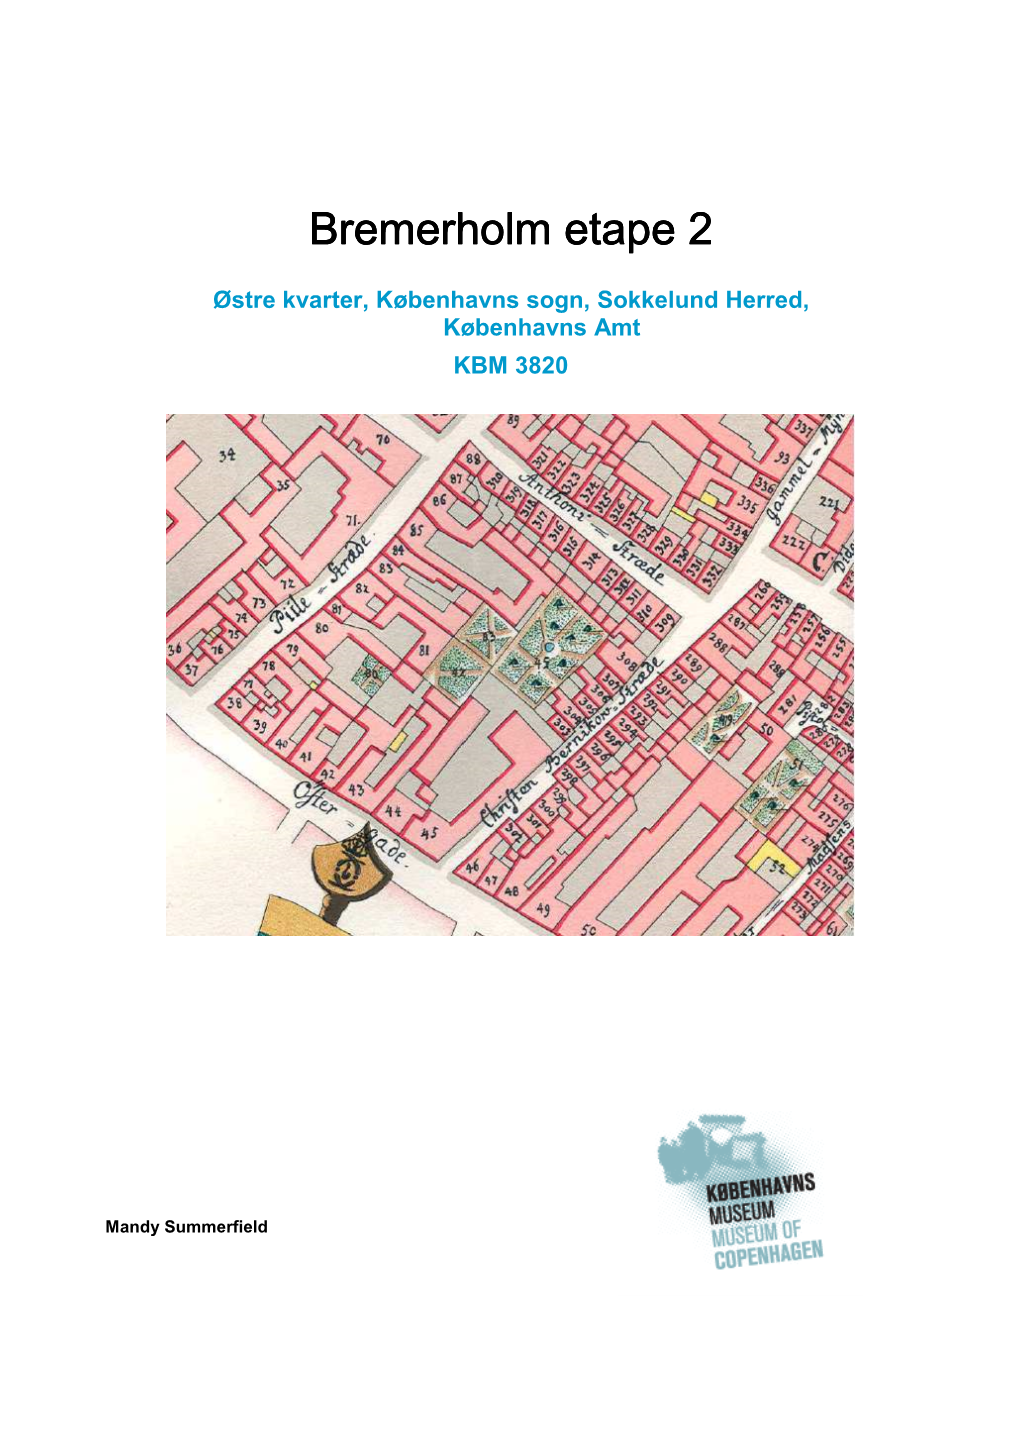 Bremerholm Etape 2 Kbm3820x